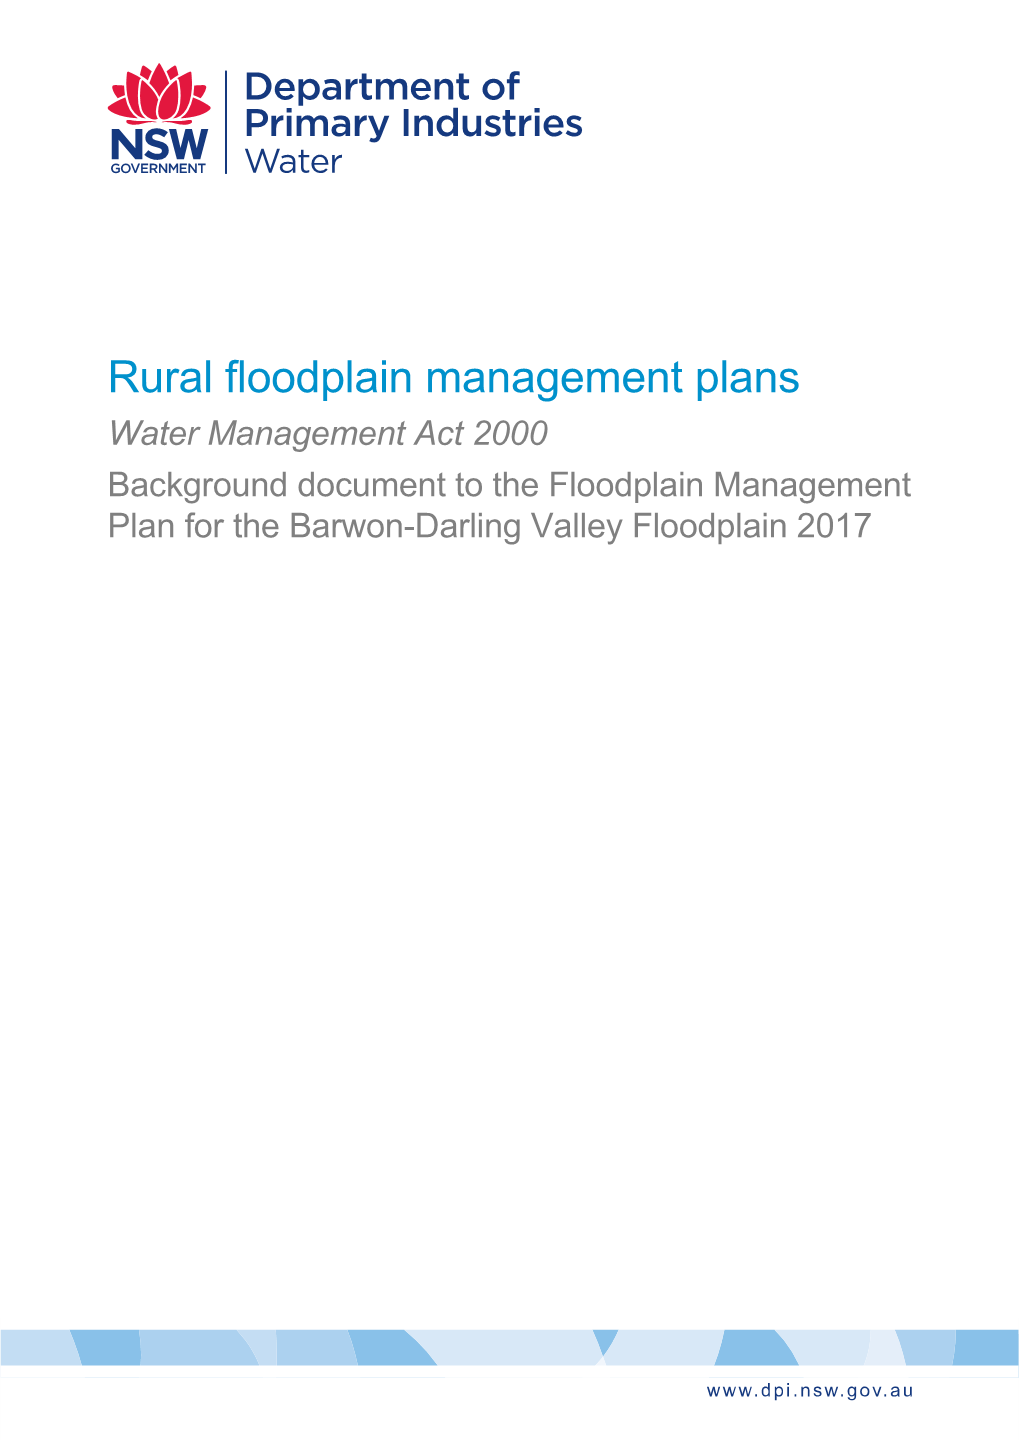 Background Document FMP Barwon Darling Valley Floodplain 2017